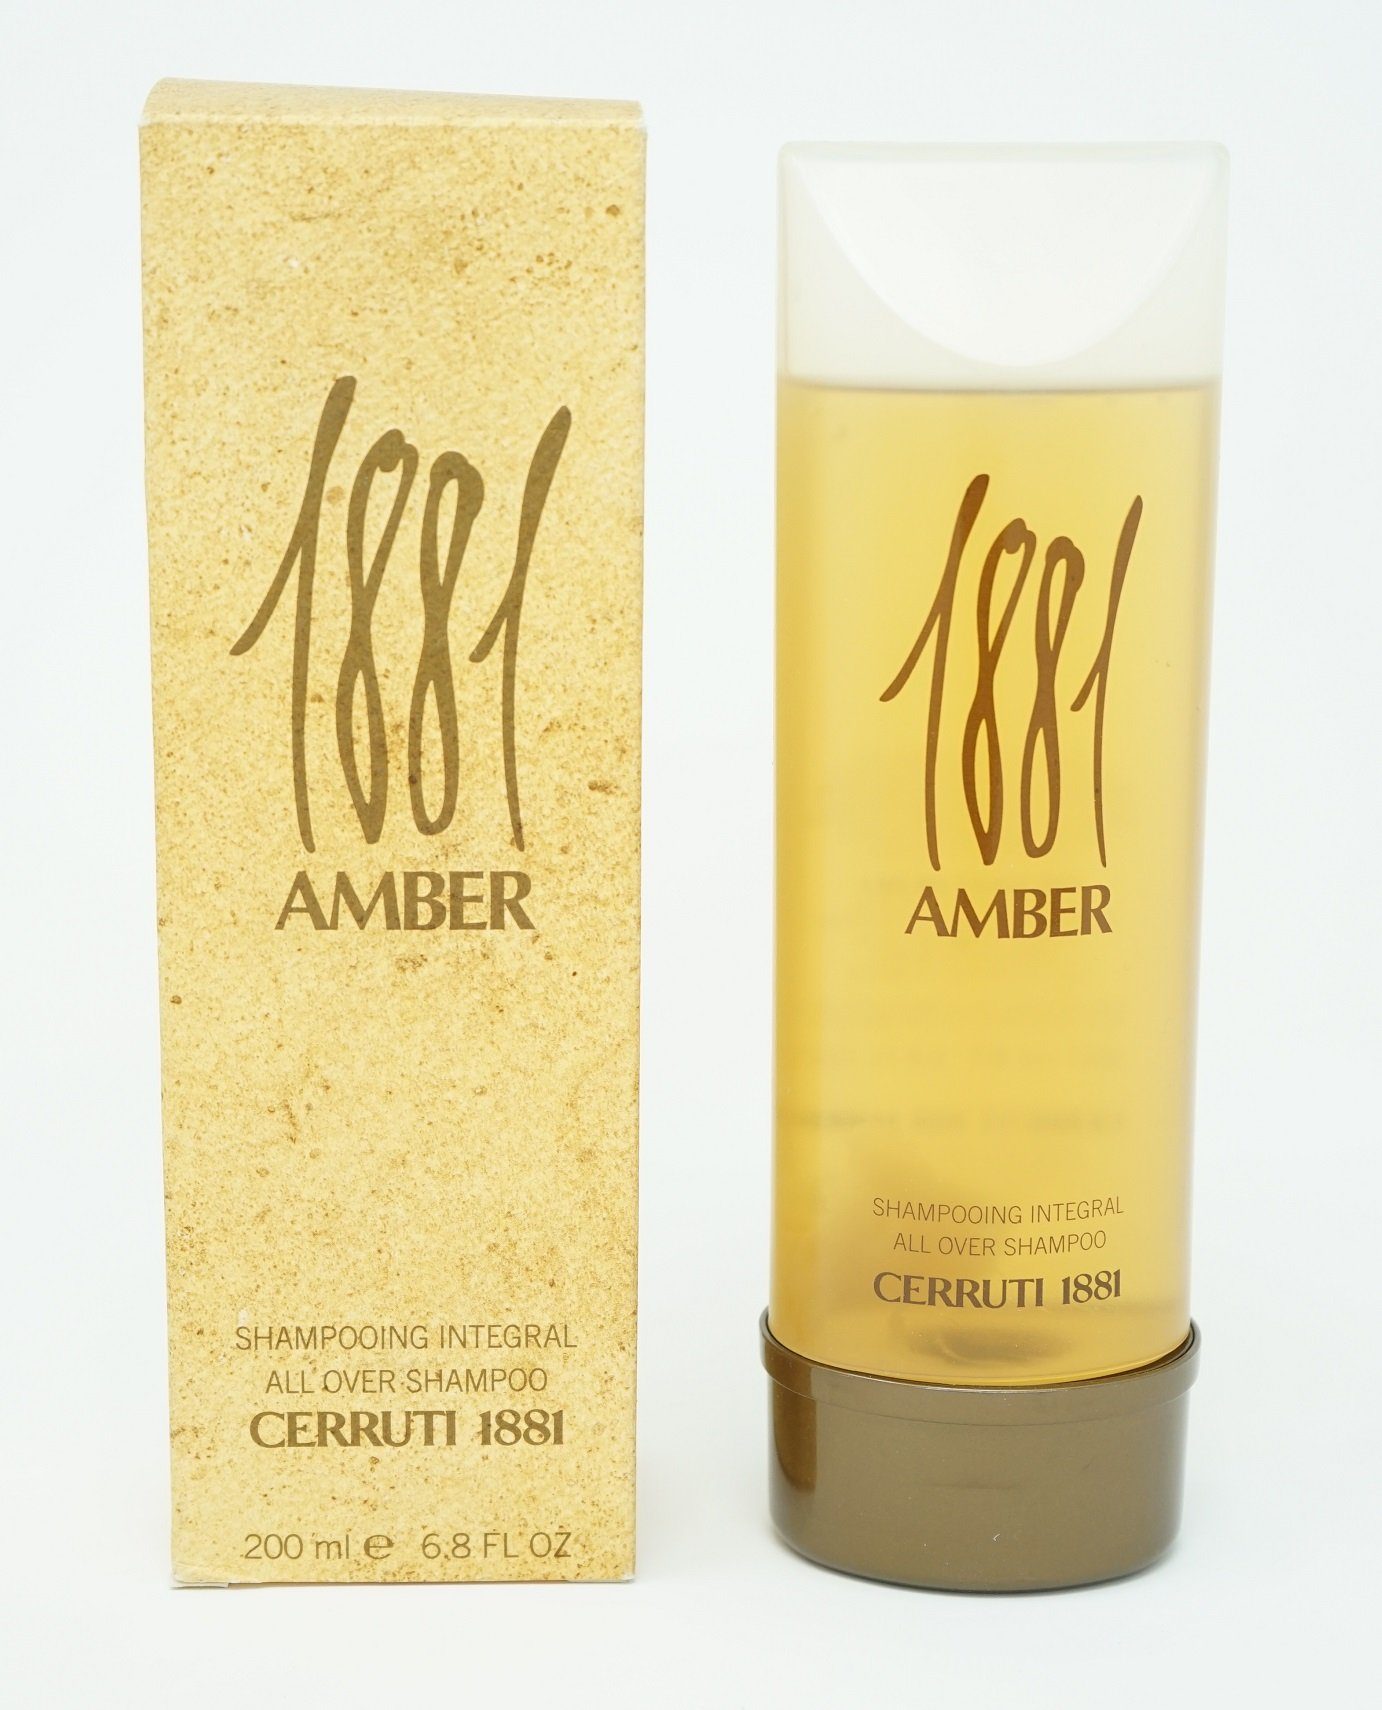 Duschgel CERRUTI Amber All Duschgel Shampoo 1881 over 200ml Cerruti